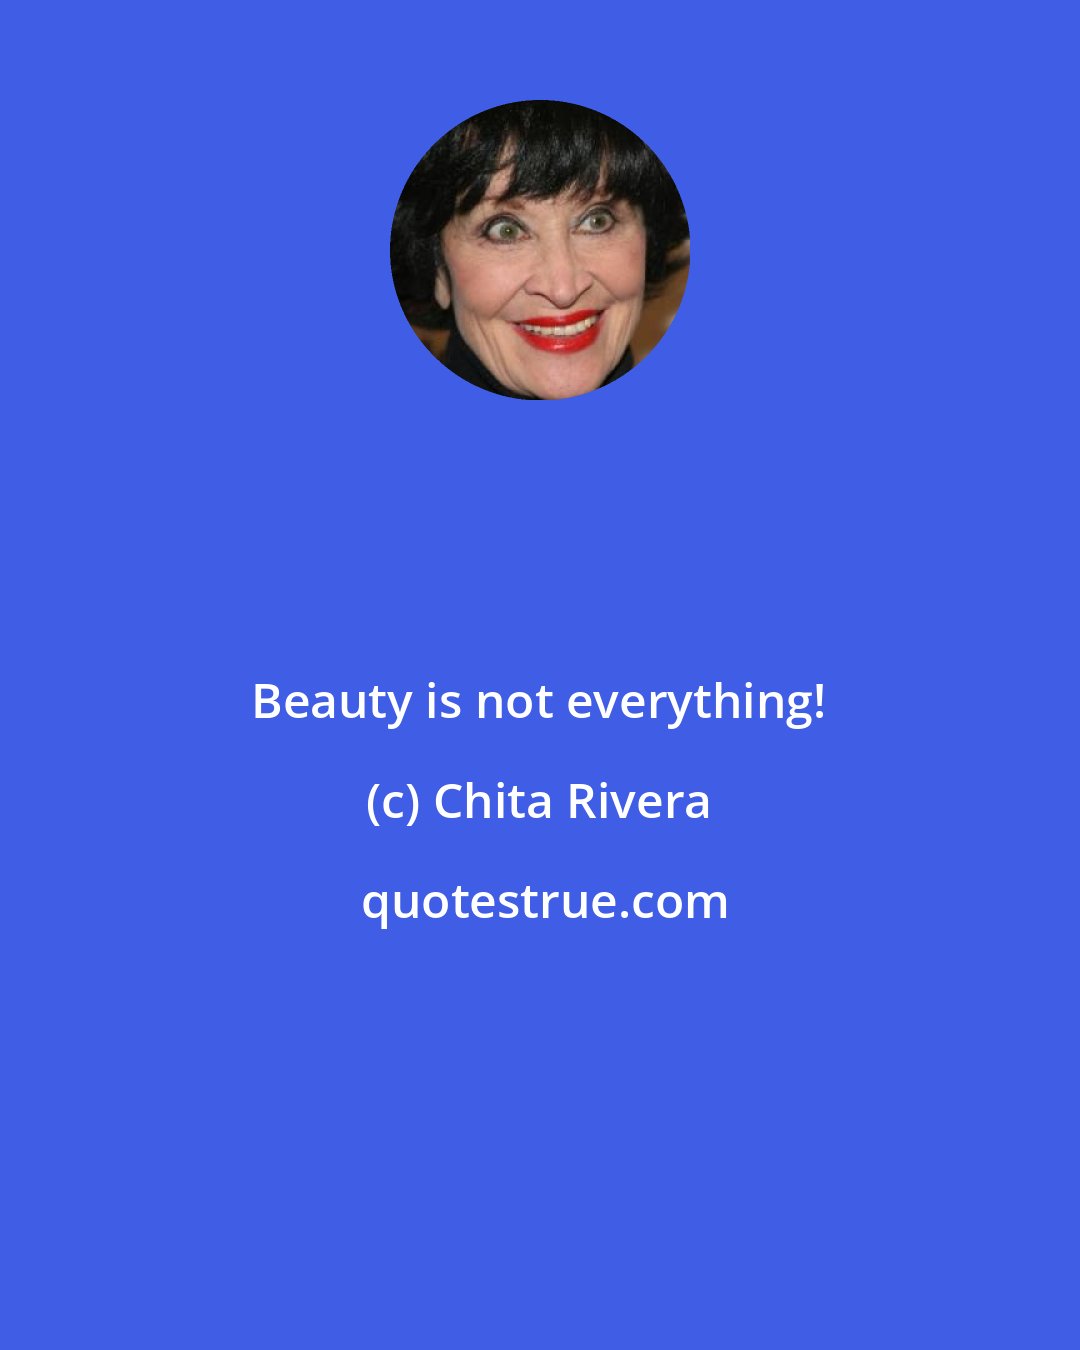 Chita Rivera: Beauty is not everything!